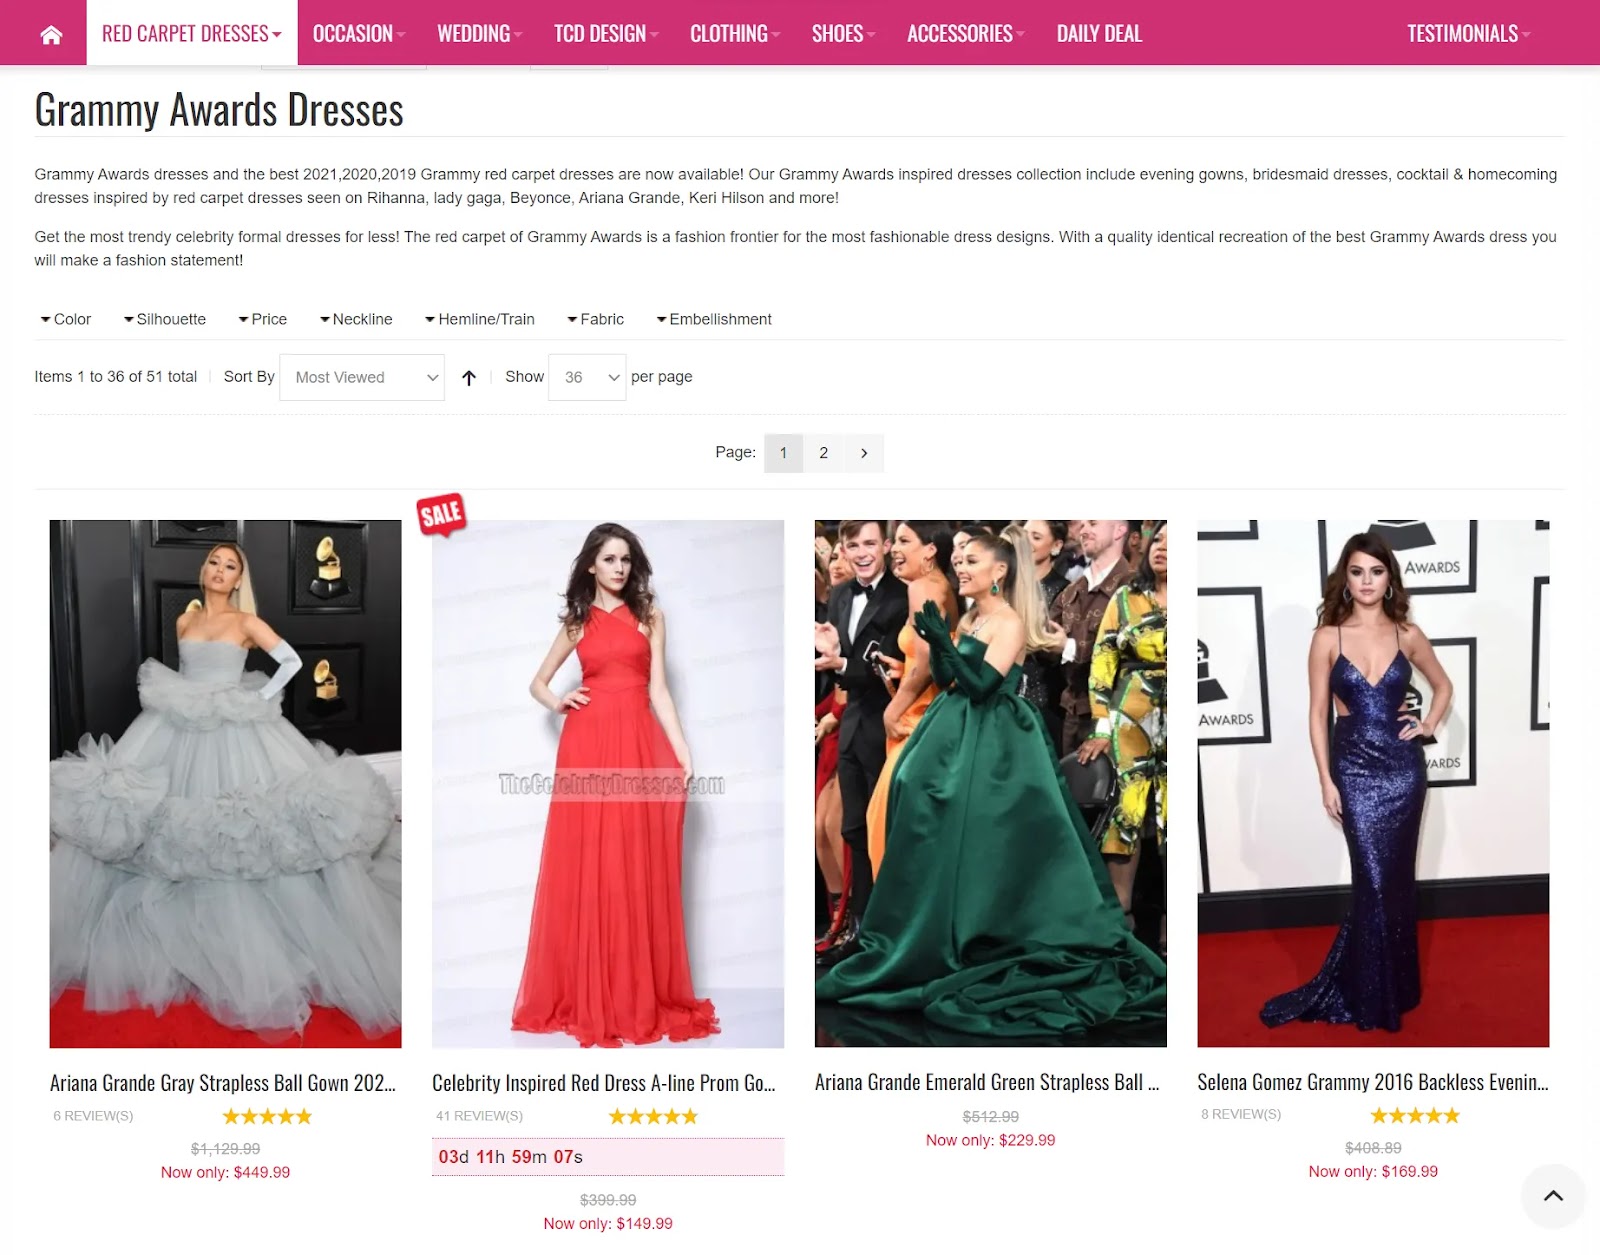 "Grammy Awards Dresses" page on TheCelebrityDresses.com